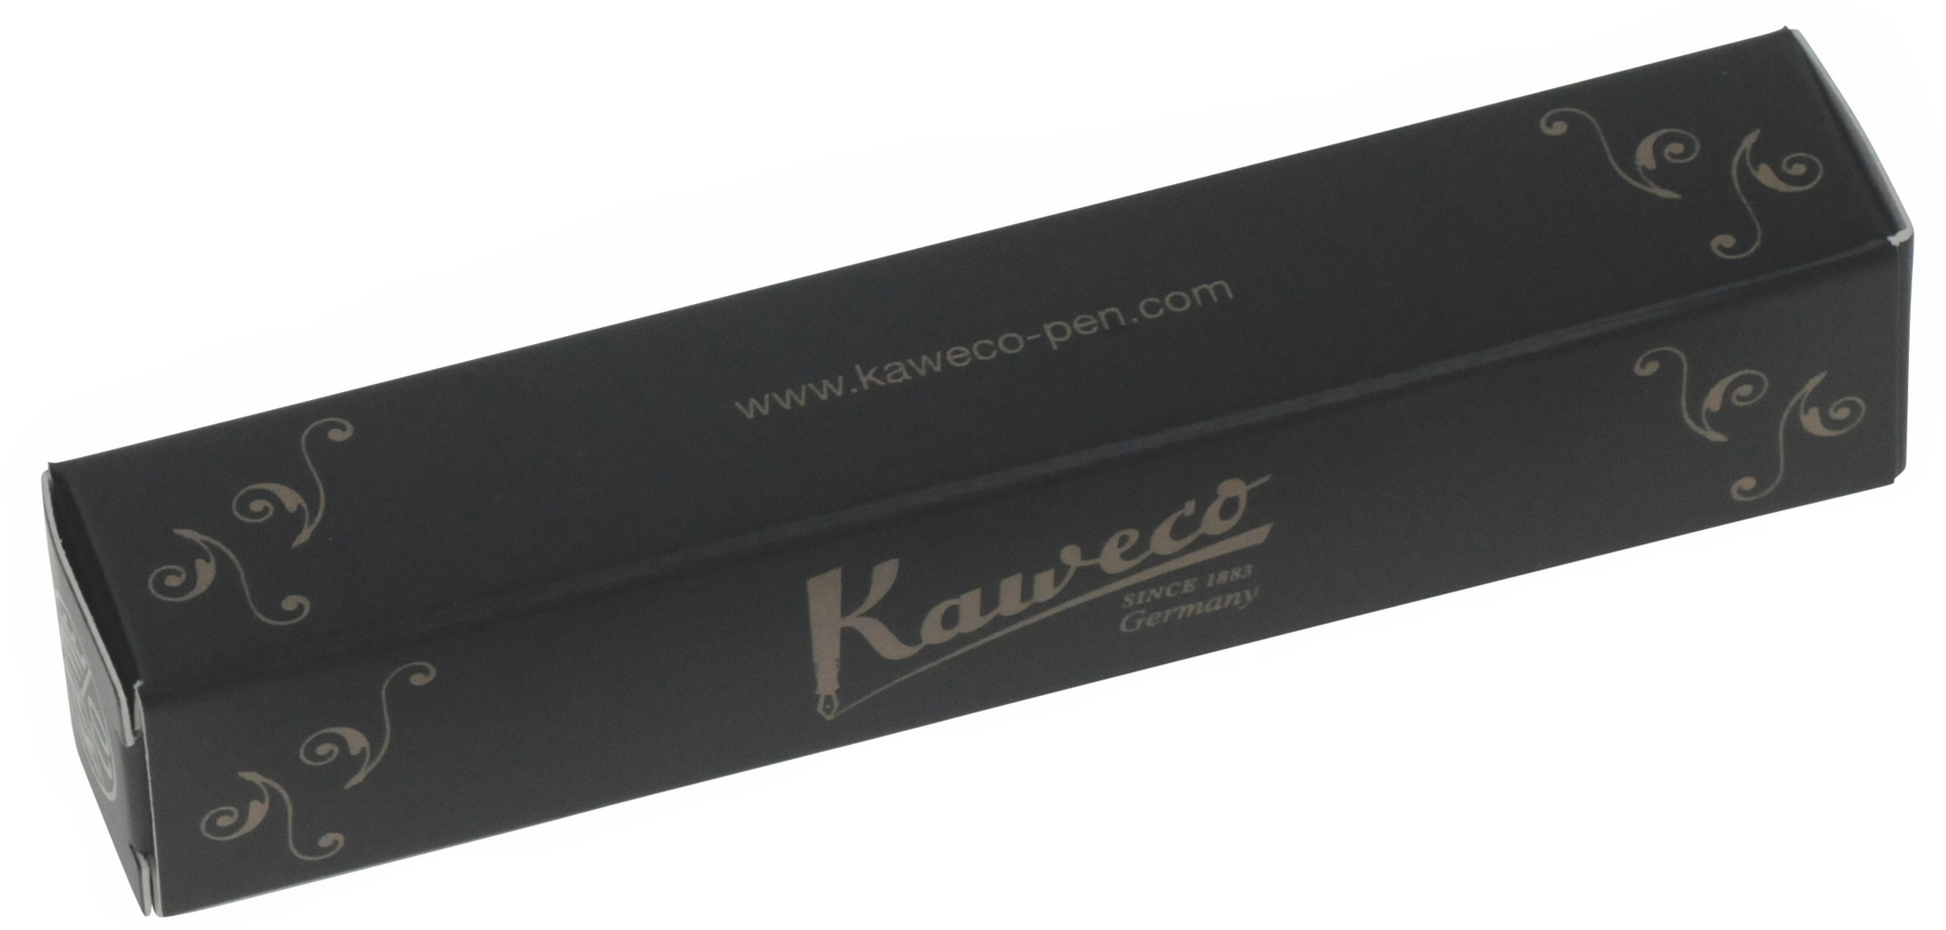 Kaweco Skyline Sport Clutch Pencil (3.2mm lead) - Macchiato Mechanical Pencil - we love pens